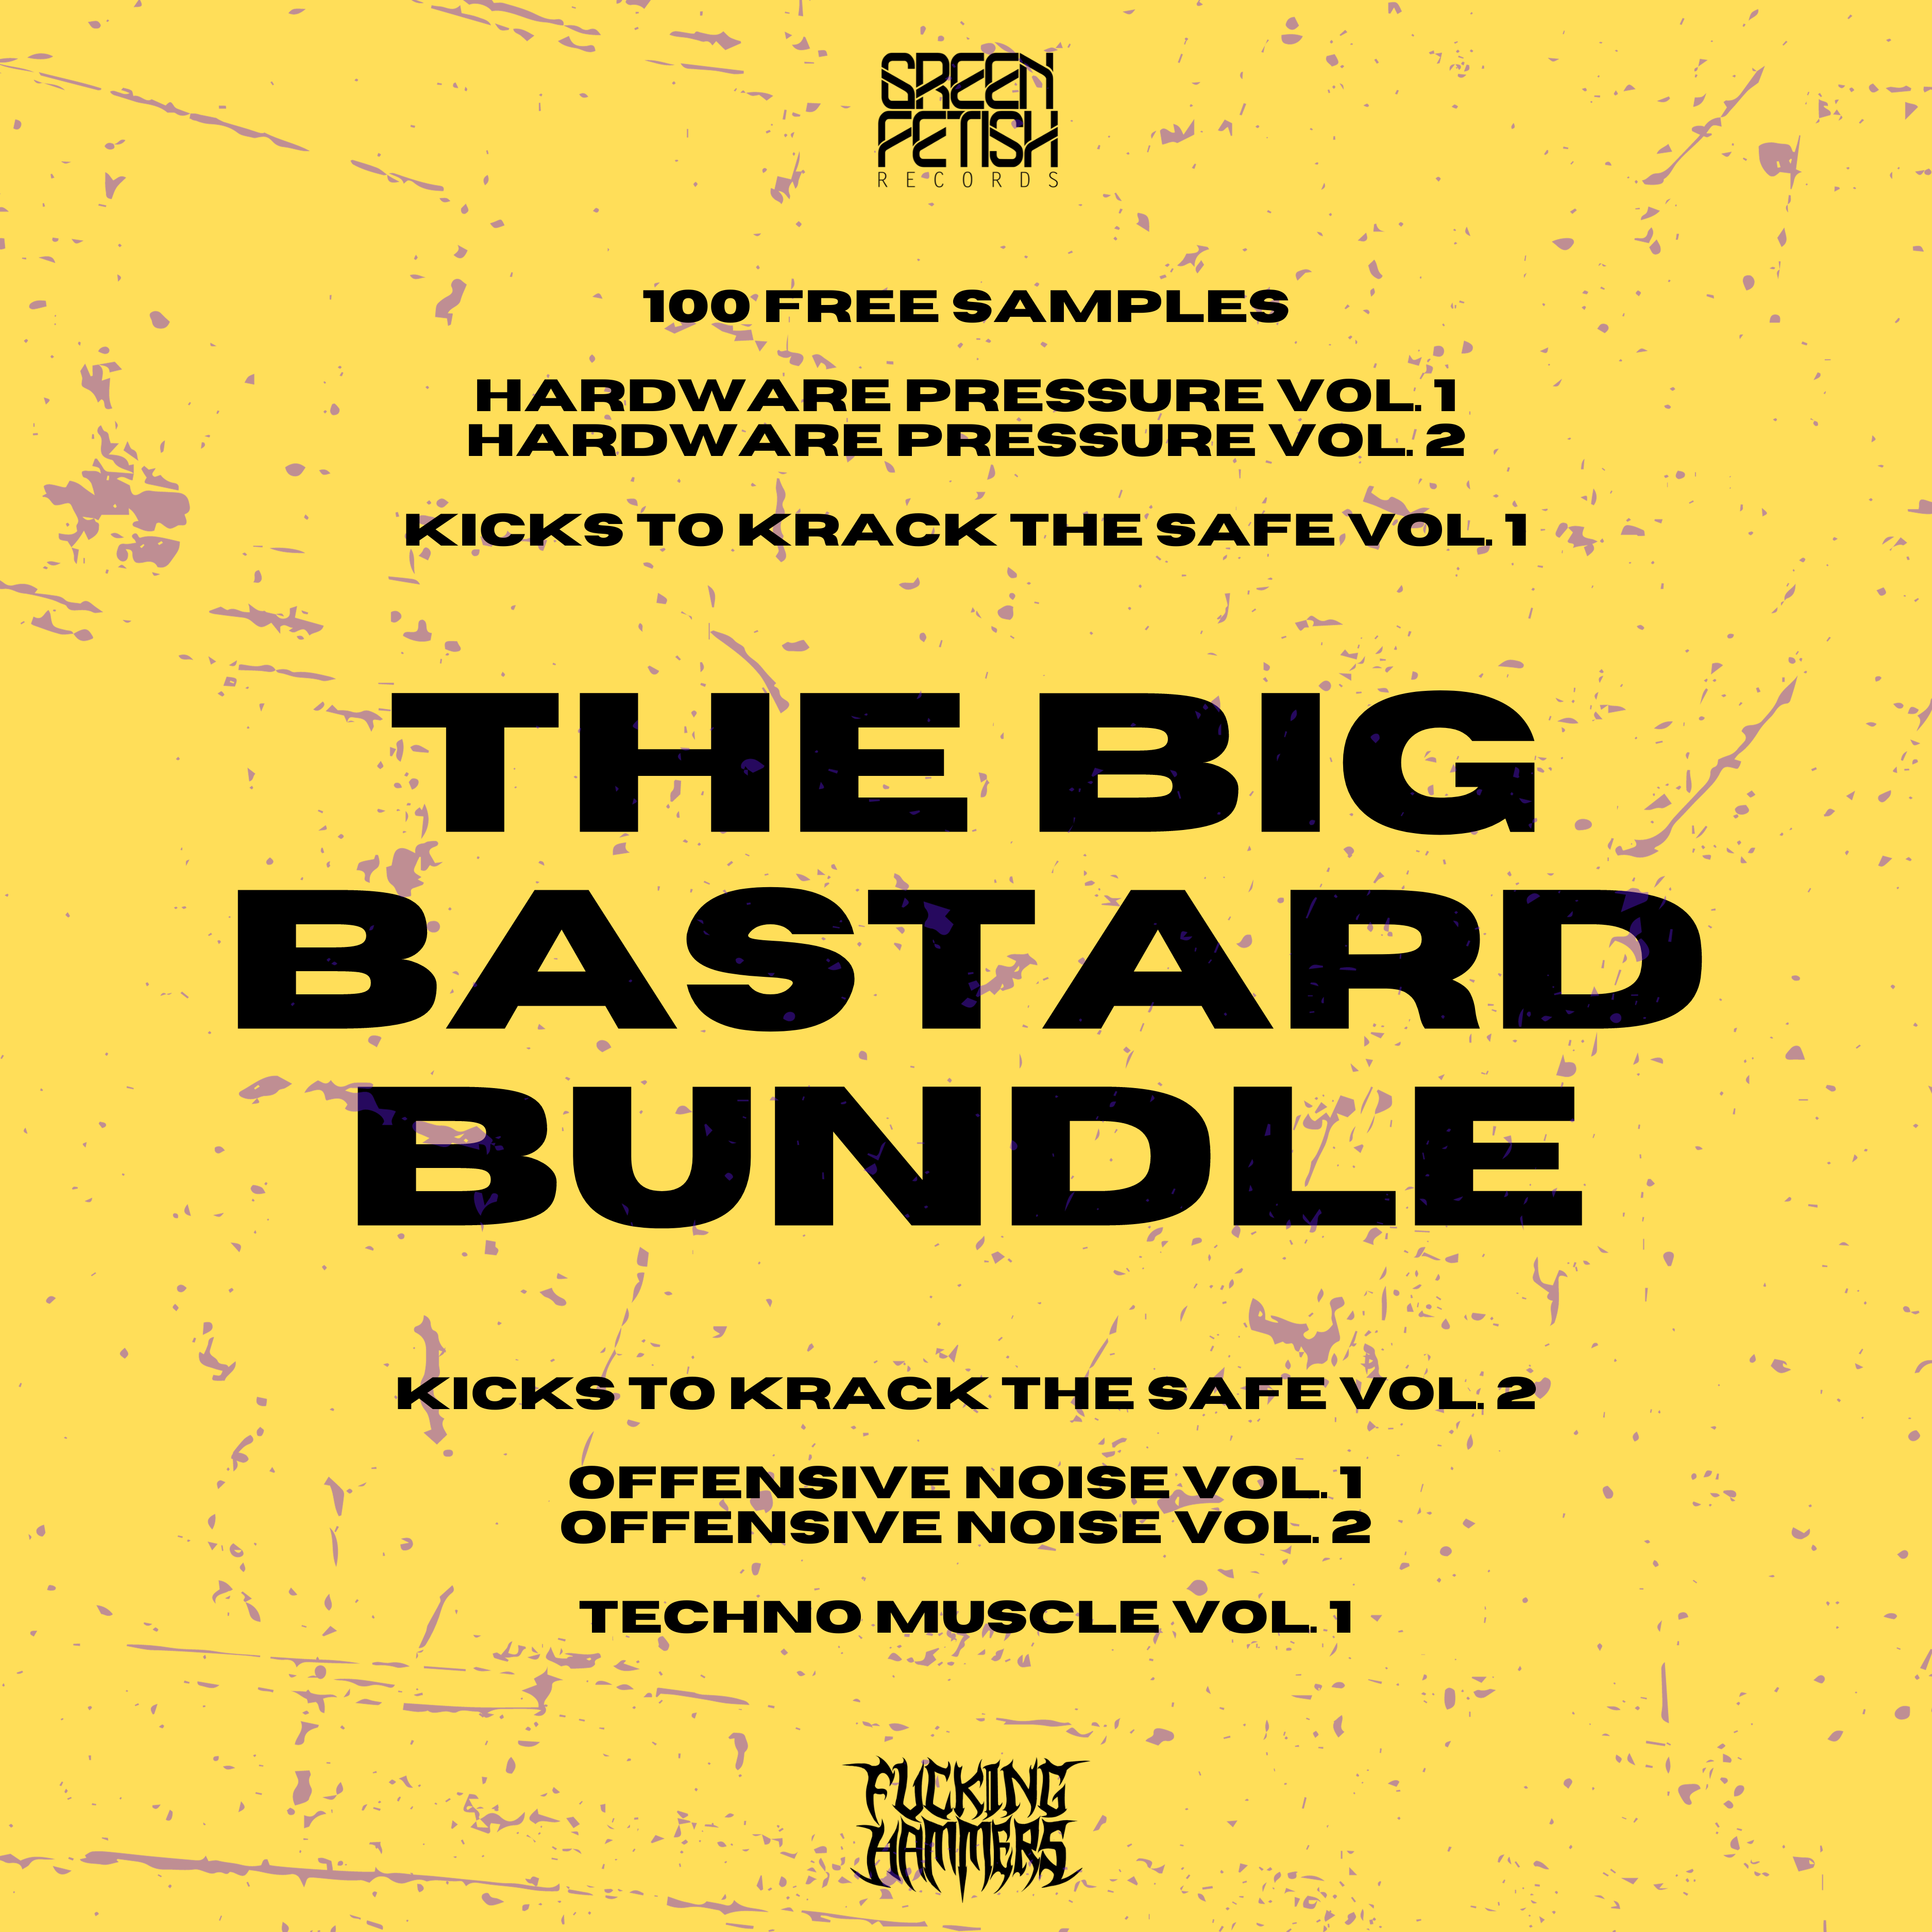 Green Fetish Records - The Big Bastard Bundle